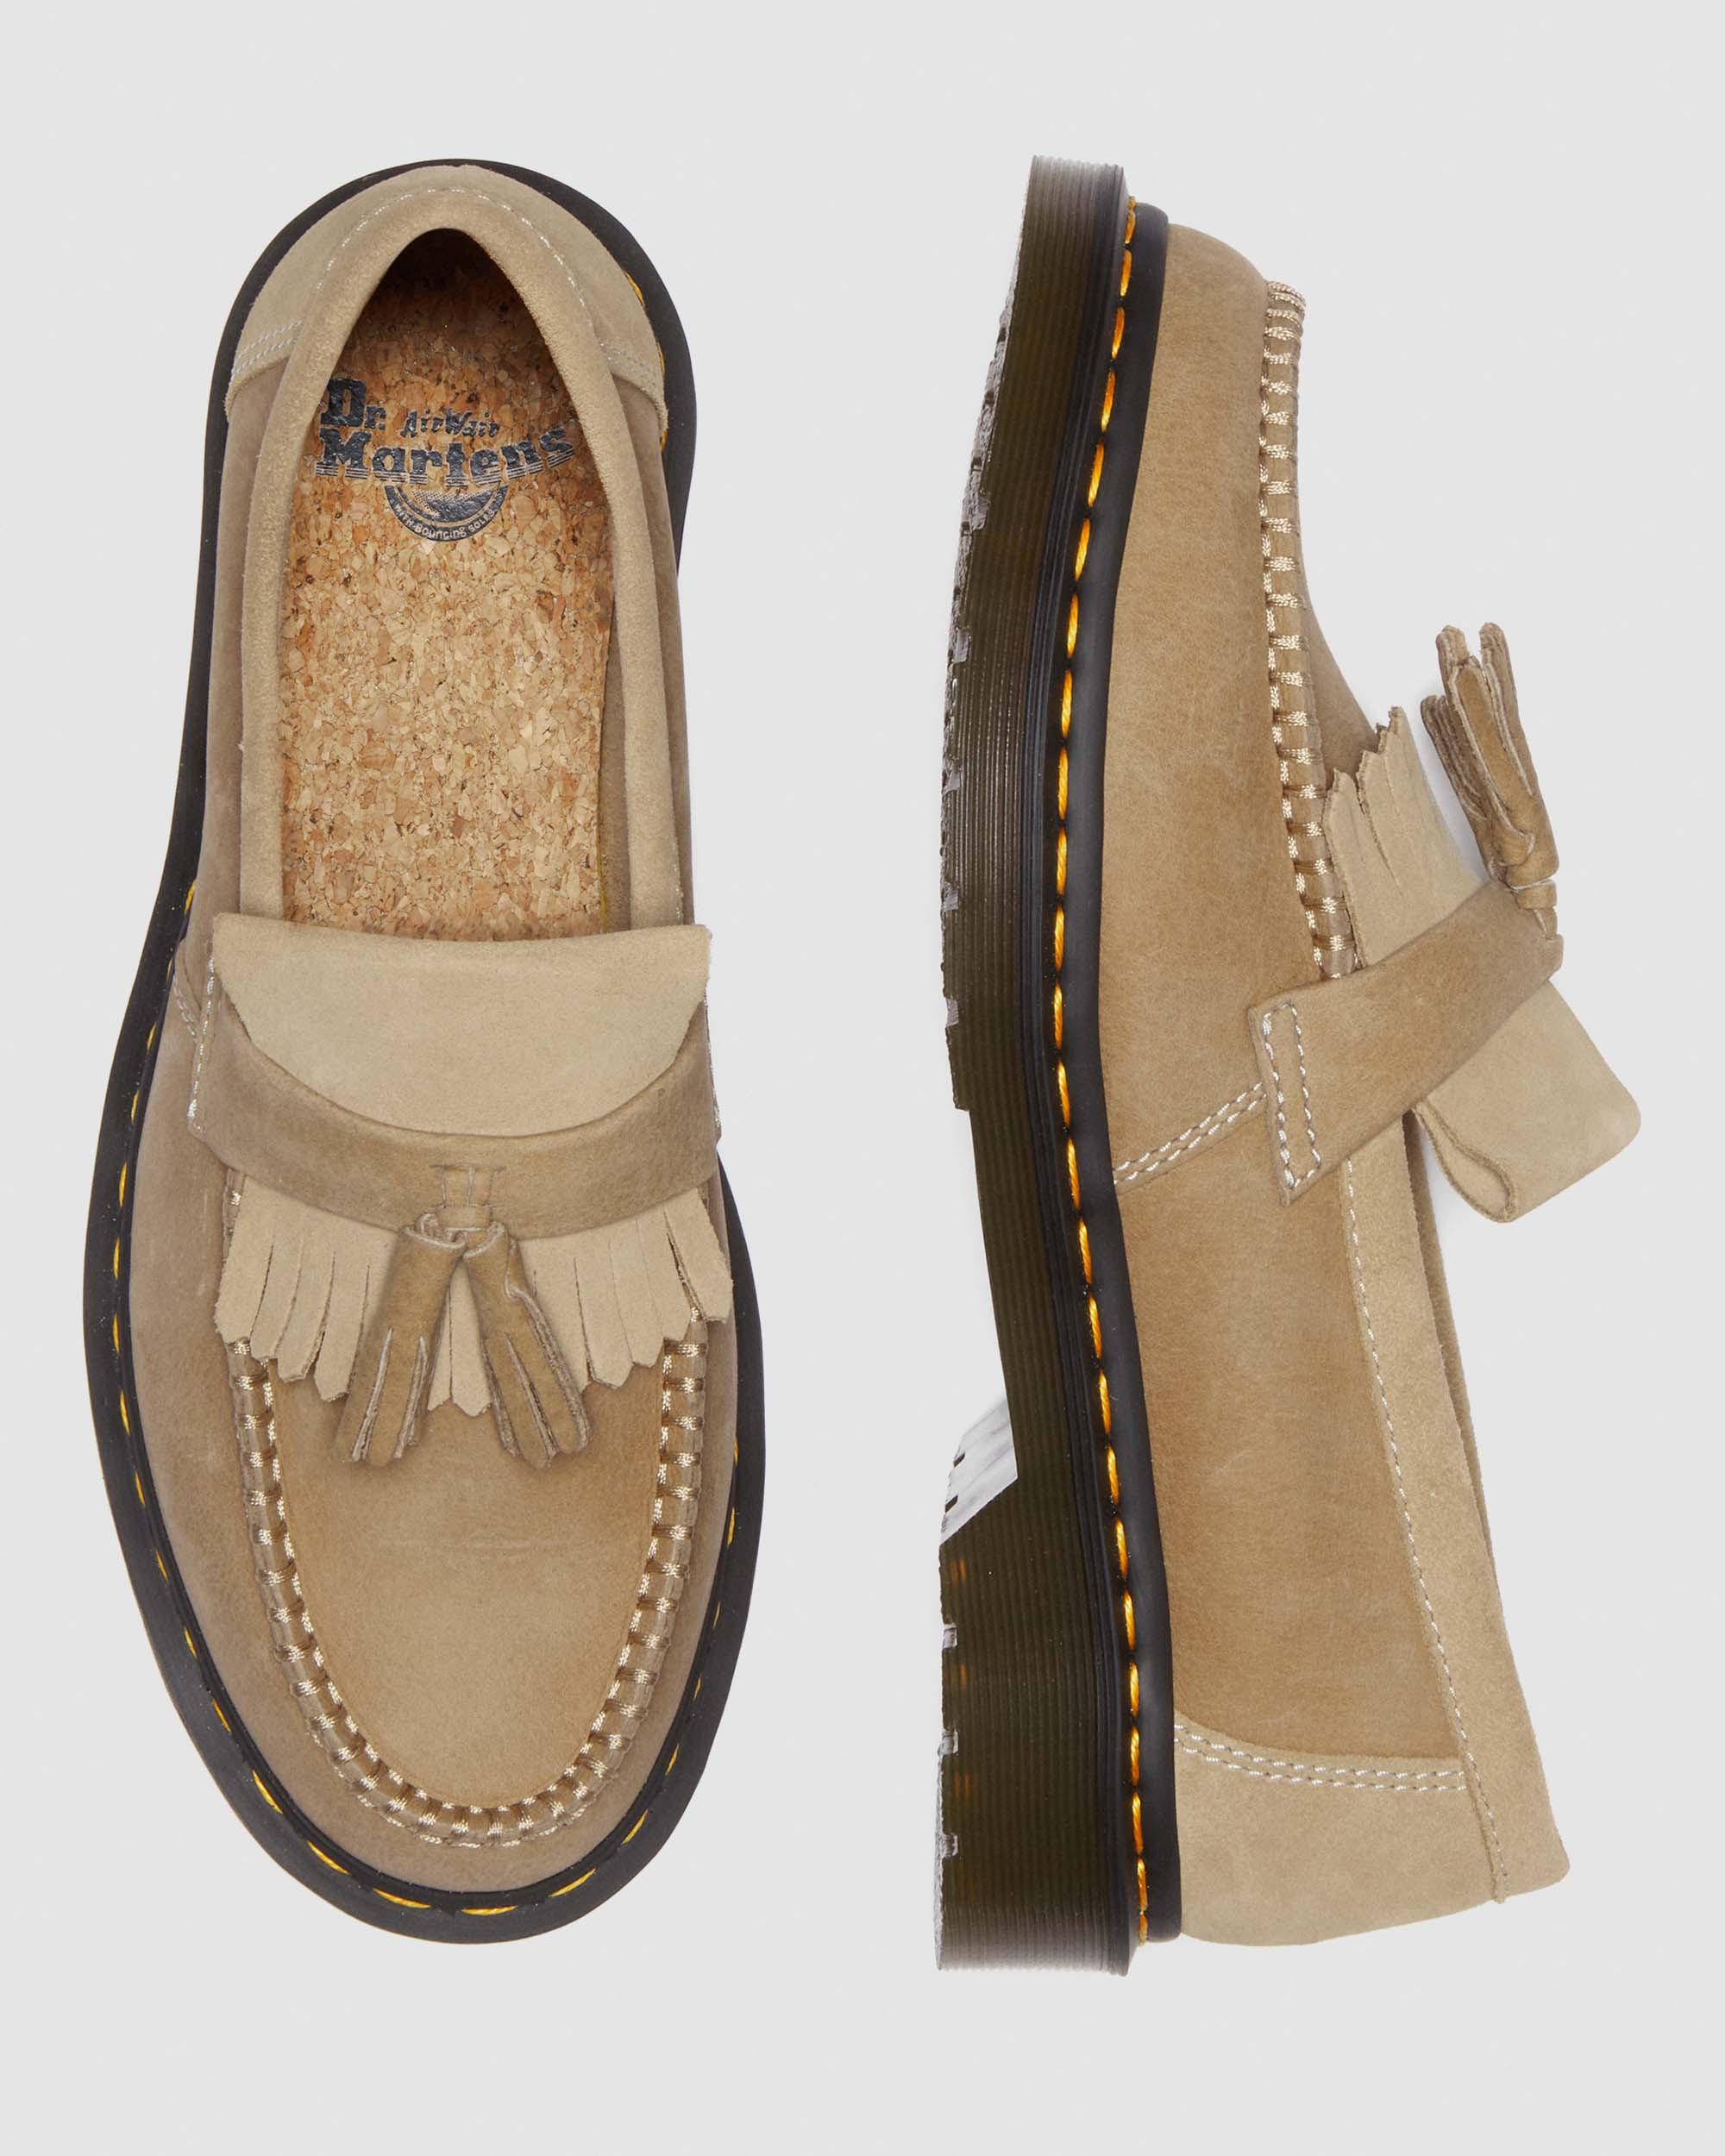 Adrian Tumbled Nubuck Leather Tassel Loafers in Savannah Tan